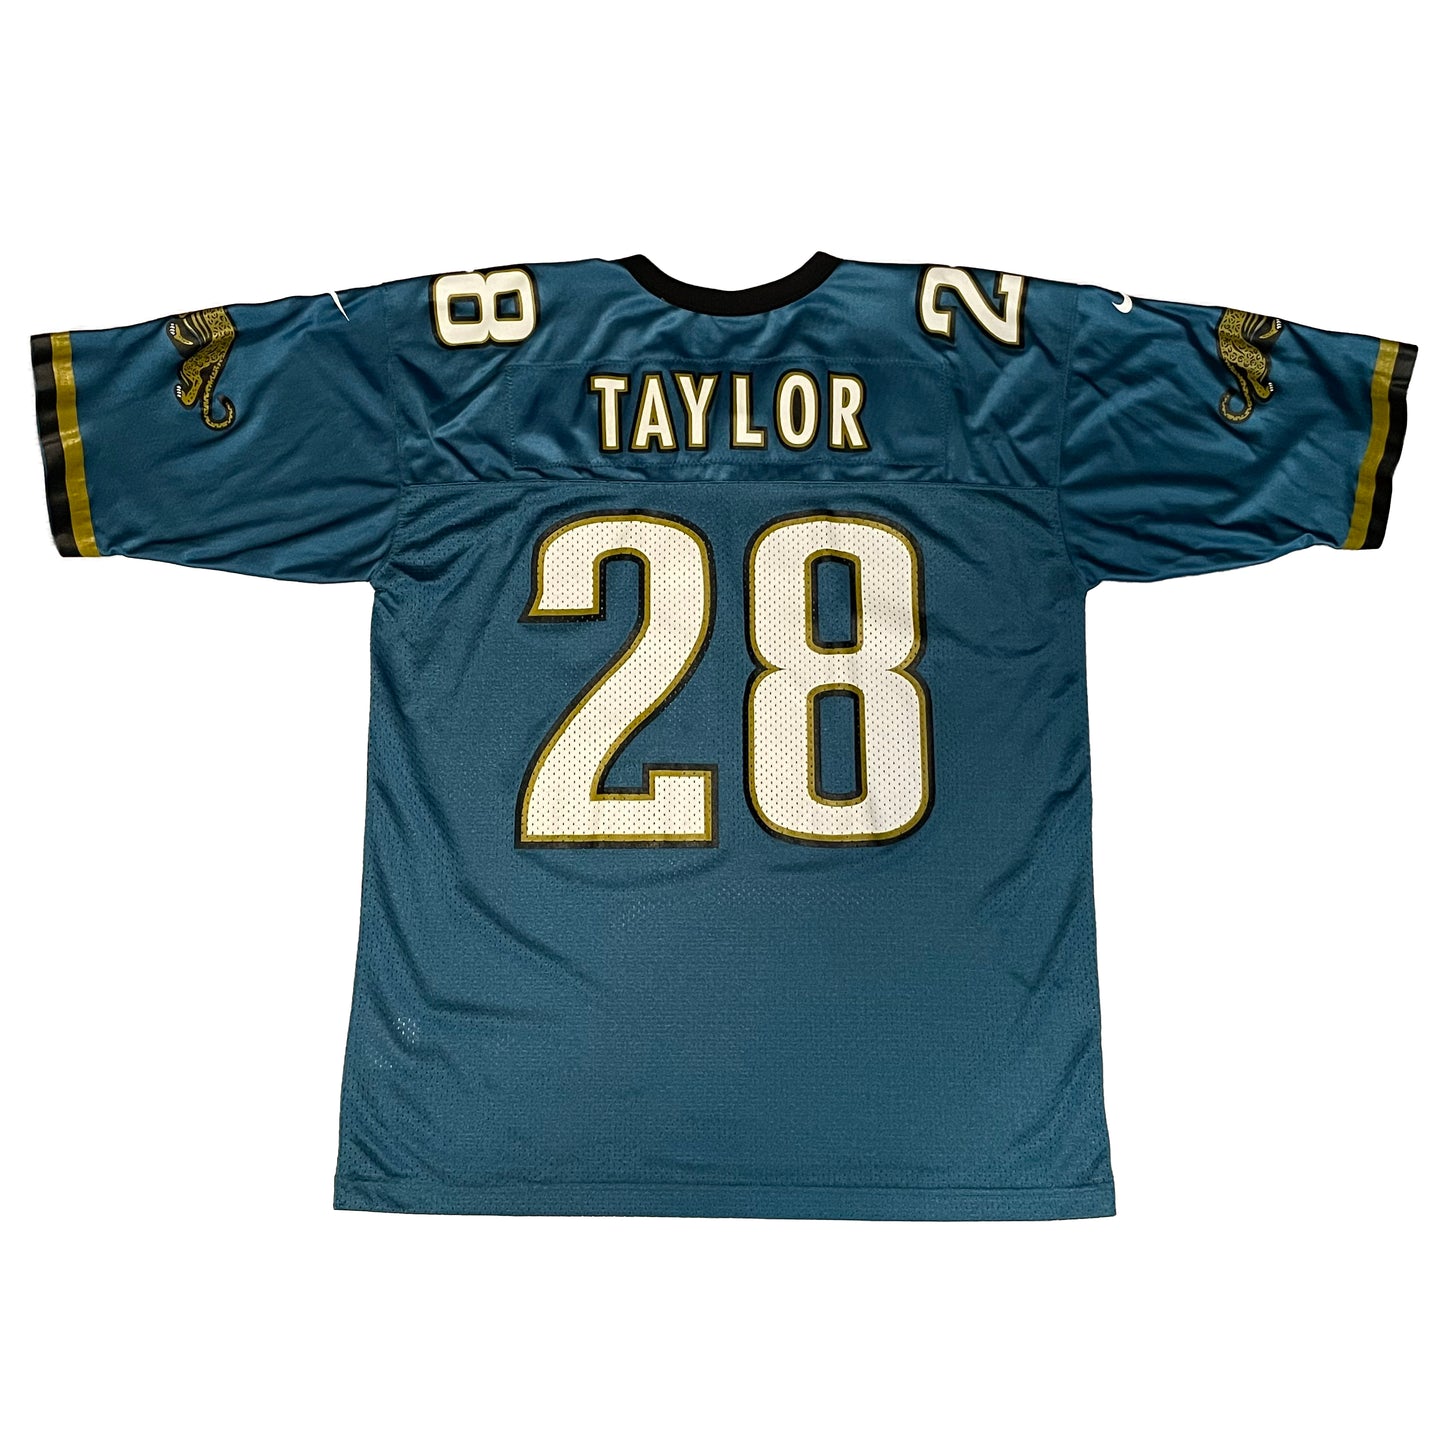 Jacksonville Jaguars Fred Taylor NIKE jersey size XL